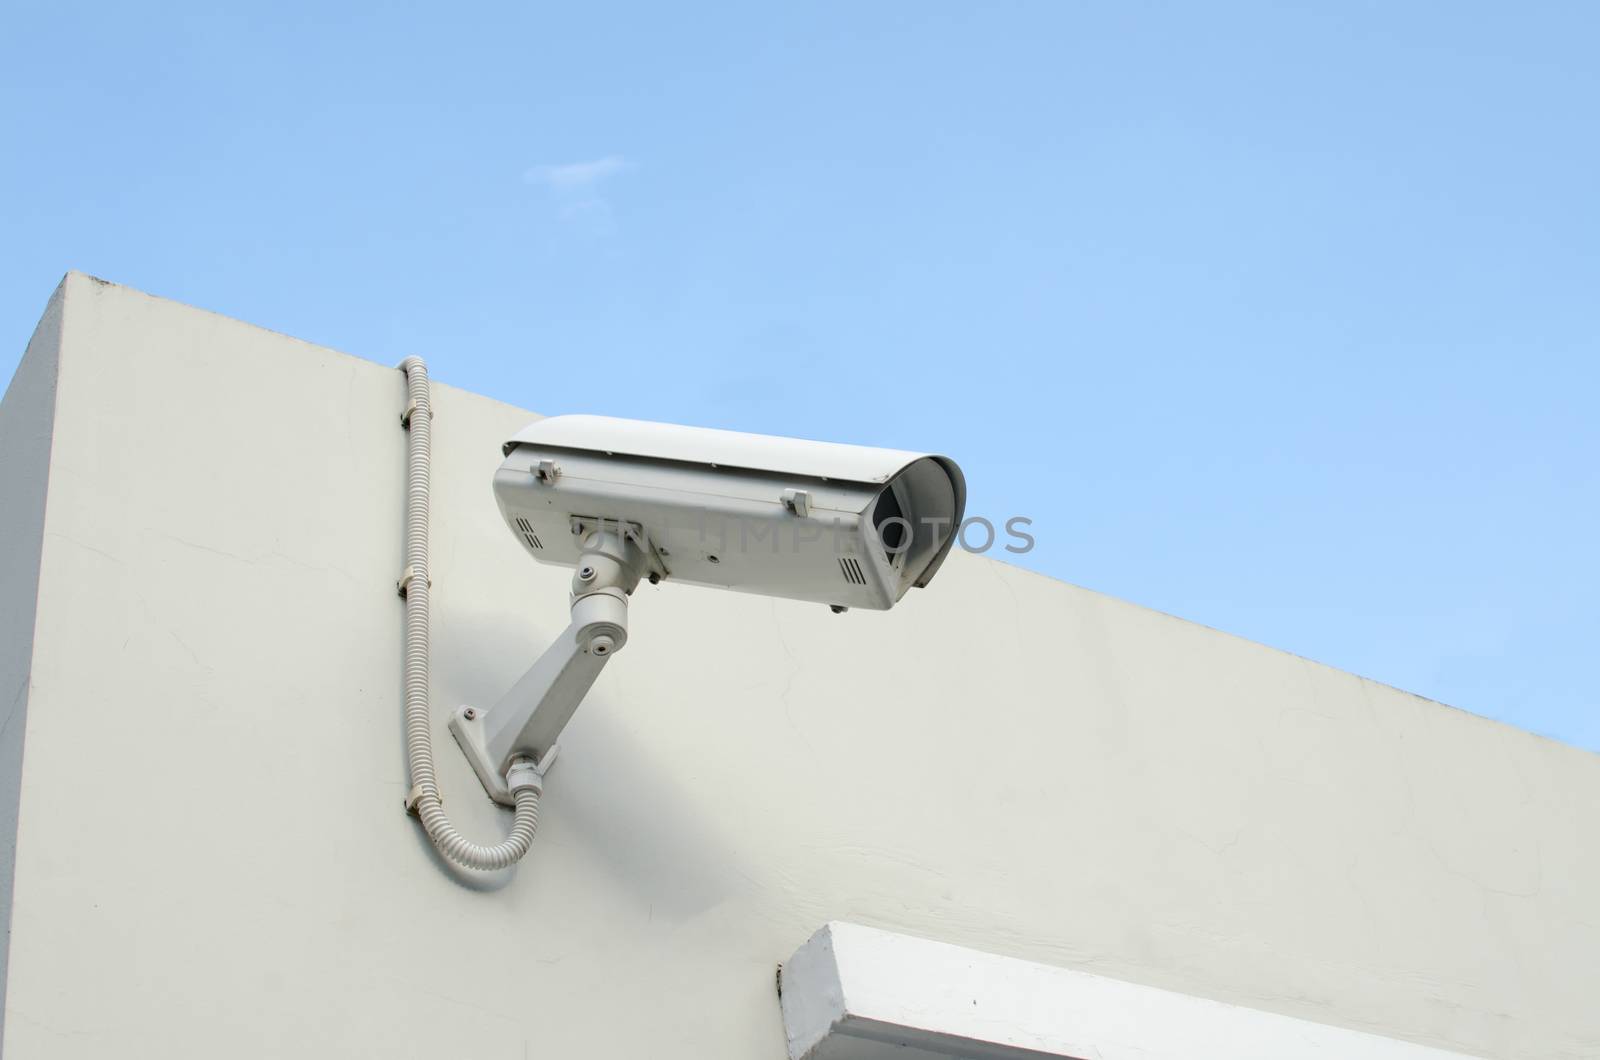 CCTV camera on a wall watch rigth.